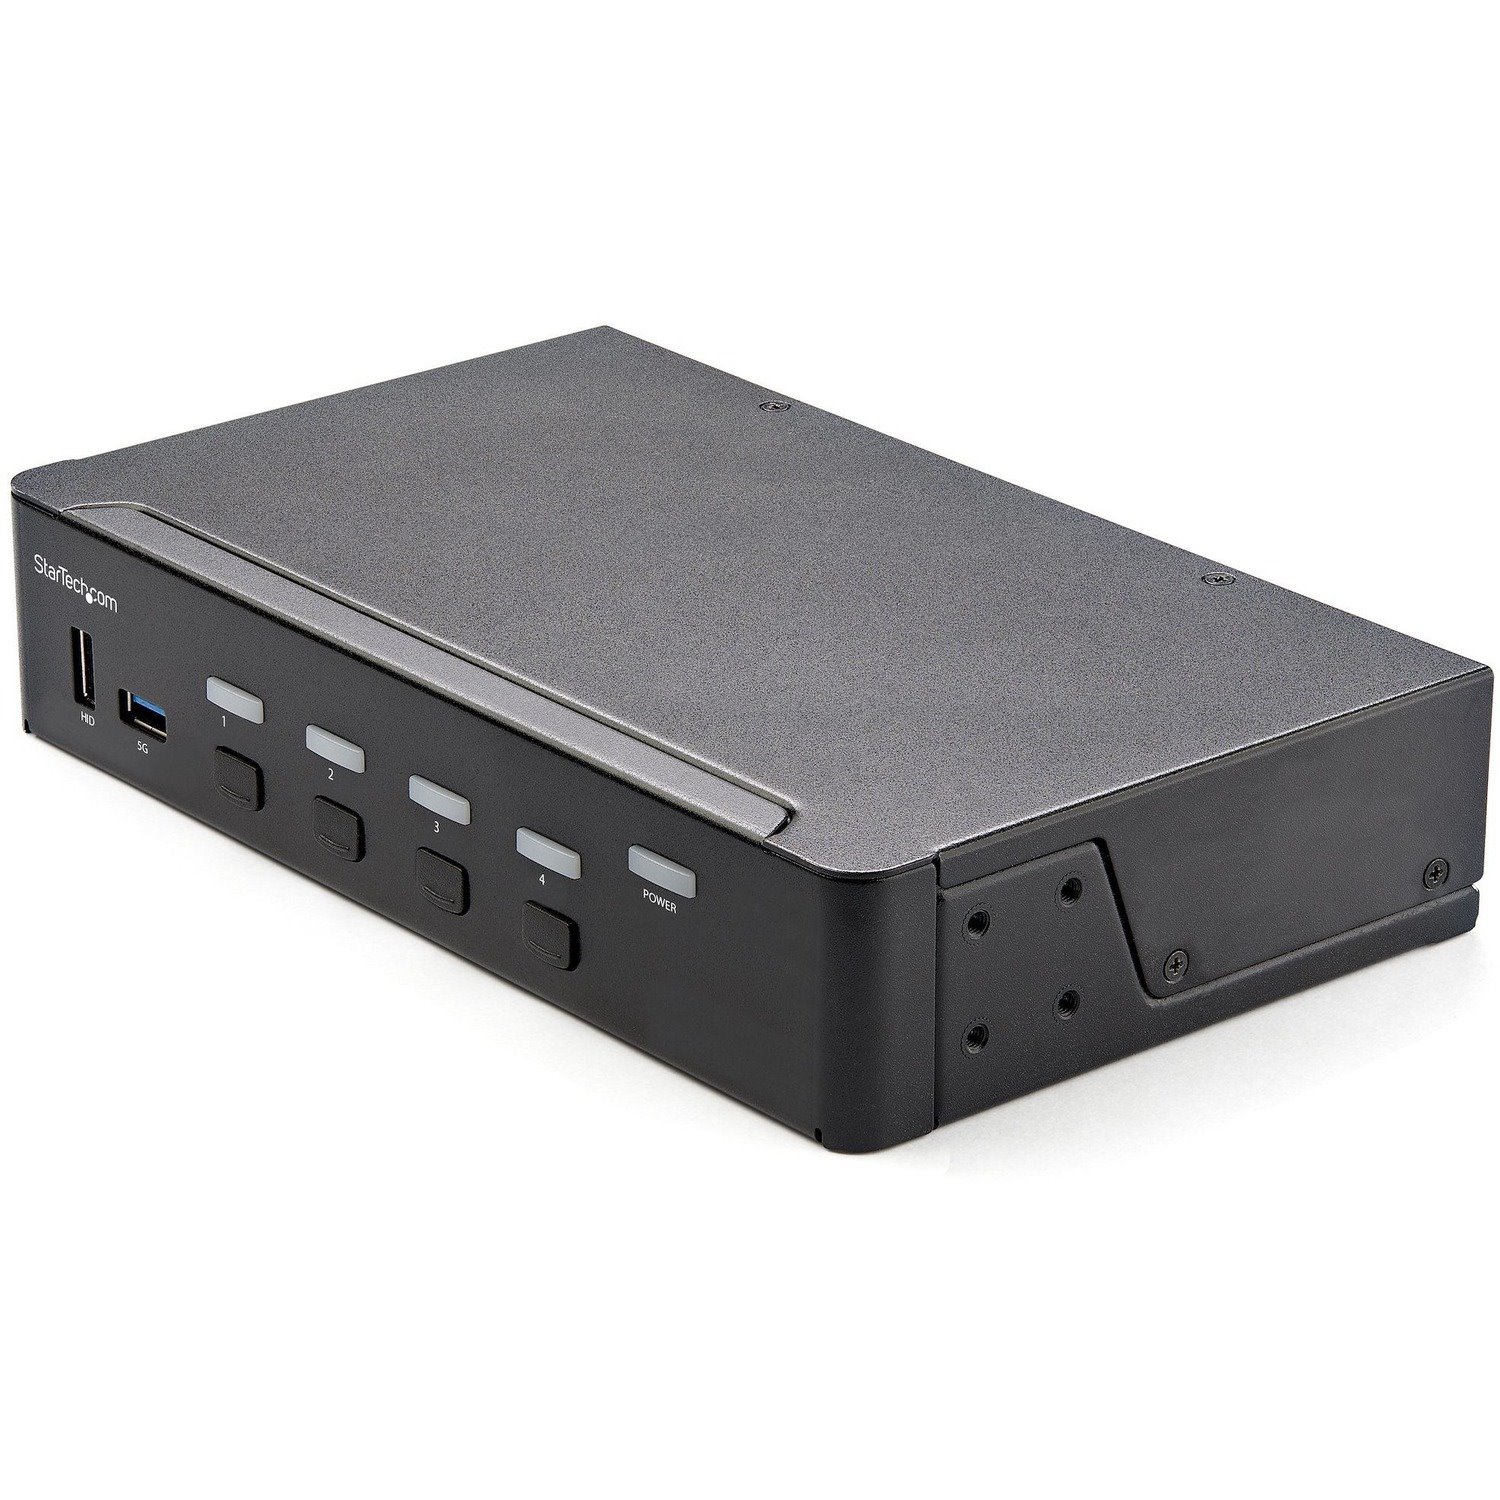 StarTech.com 4 Port HDMI KVM Switch 4K 60Hz UHD HDR, HDMI 2.0 Single Monitor, 2 Port USB 3.0 Hub, 4x USB HID, Audio, Hotkey Switching, TAA